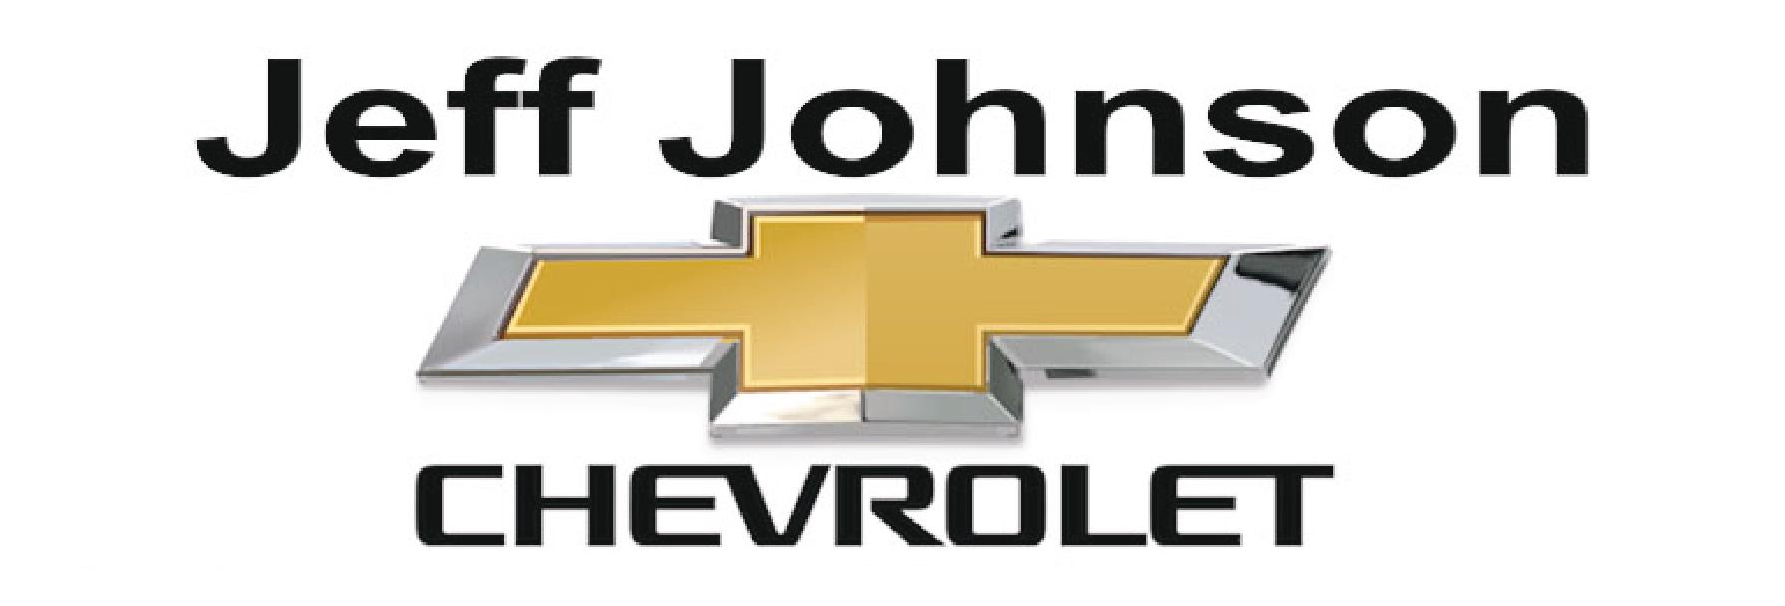 Jeff Johnson Chevrolet